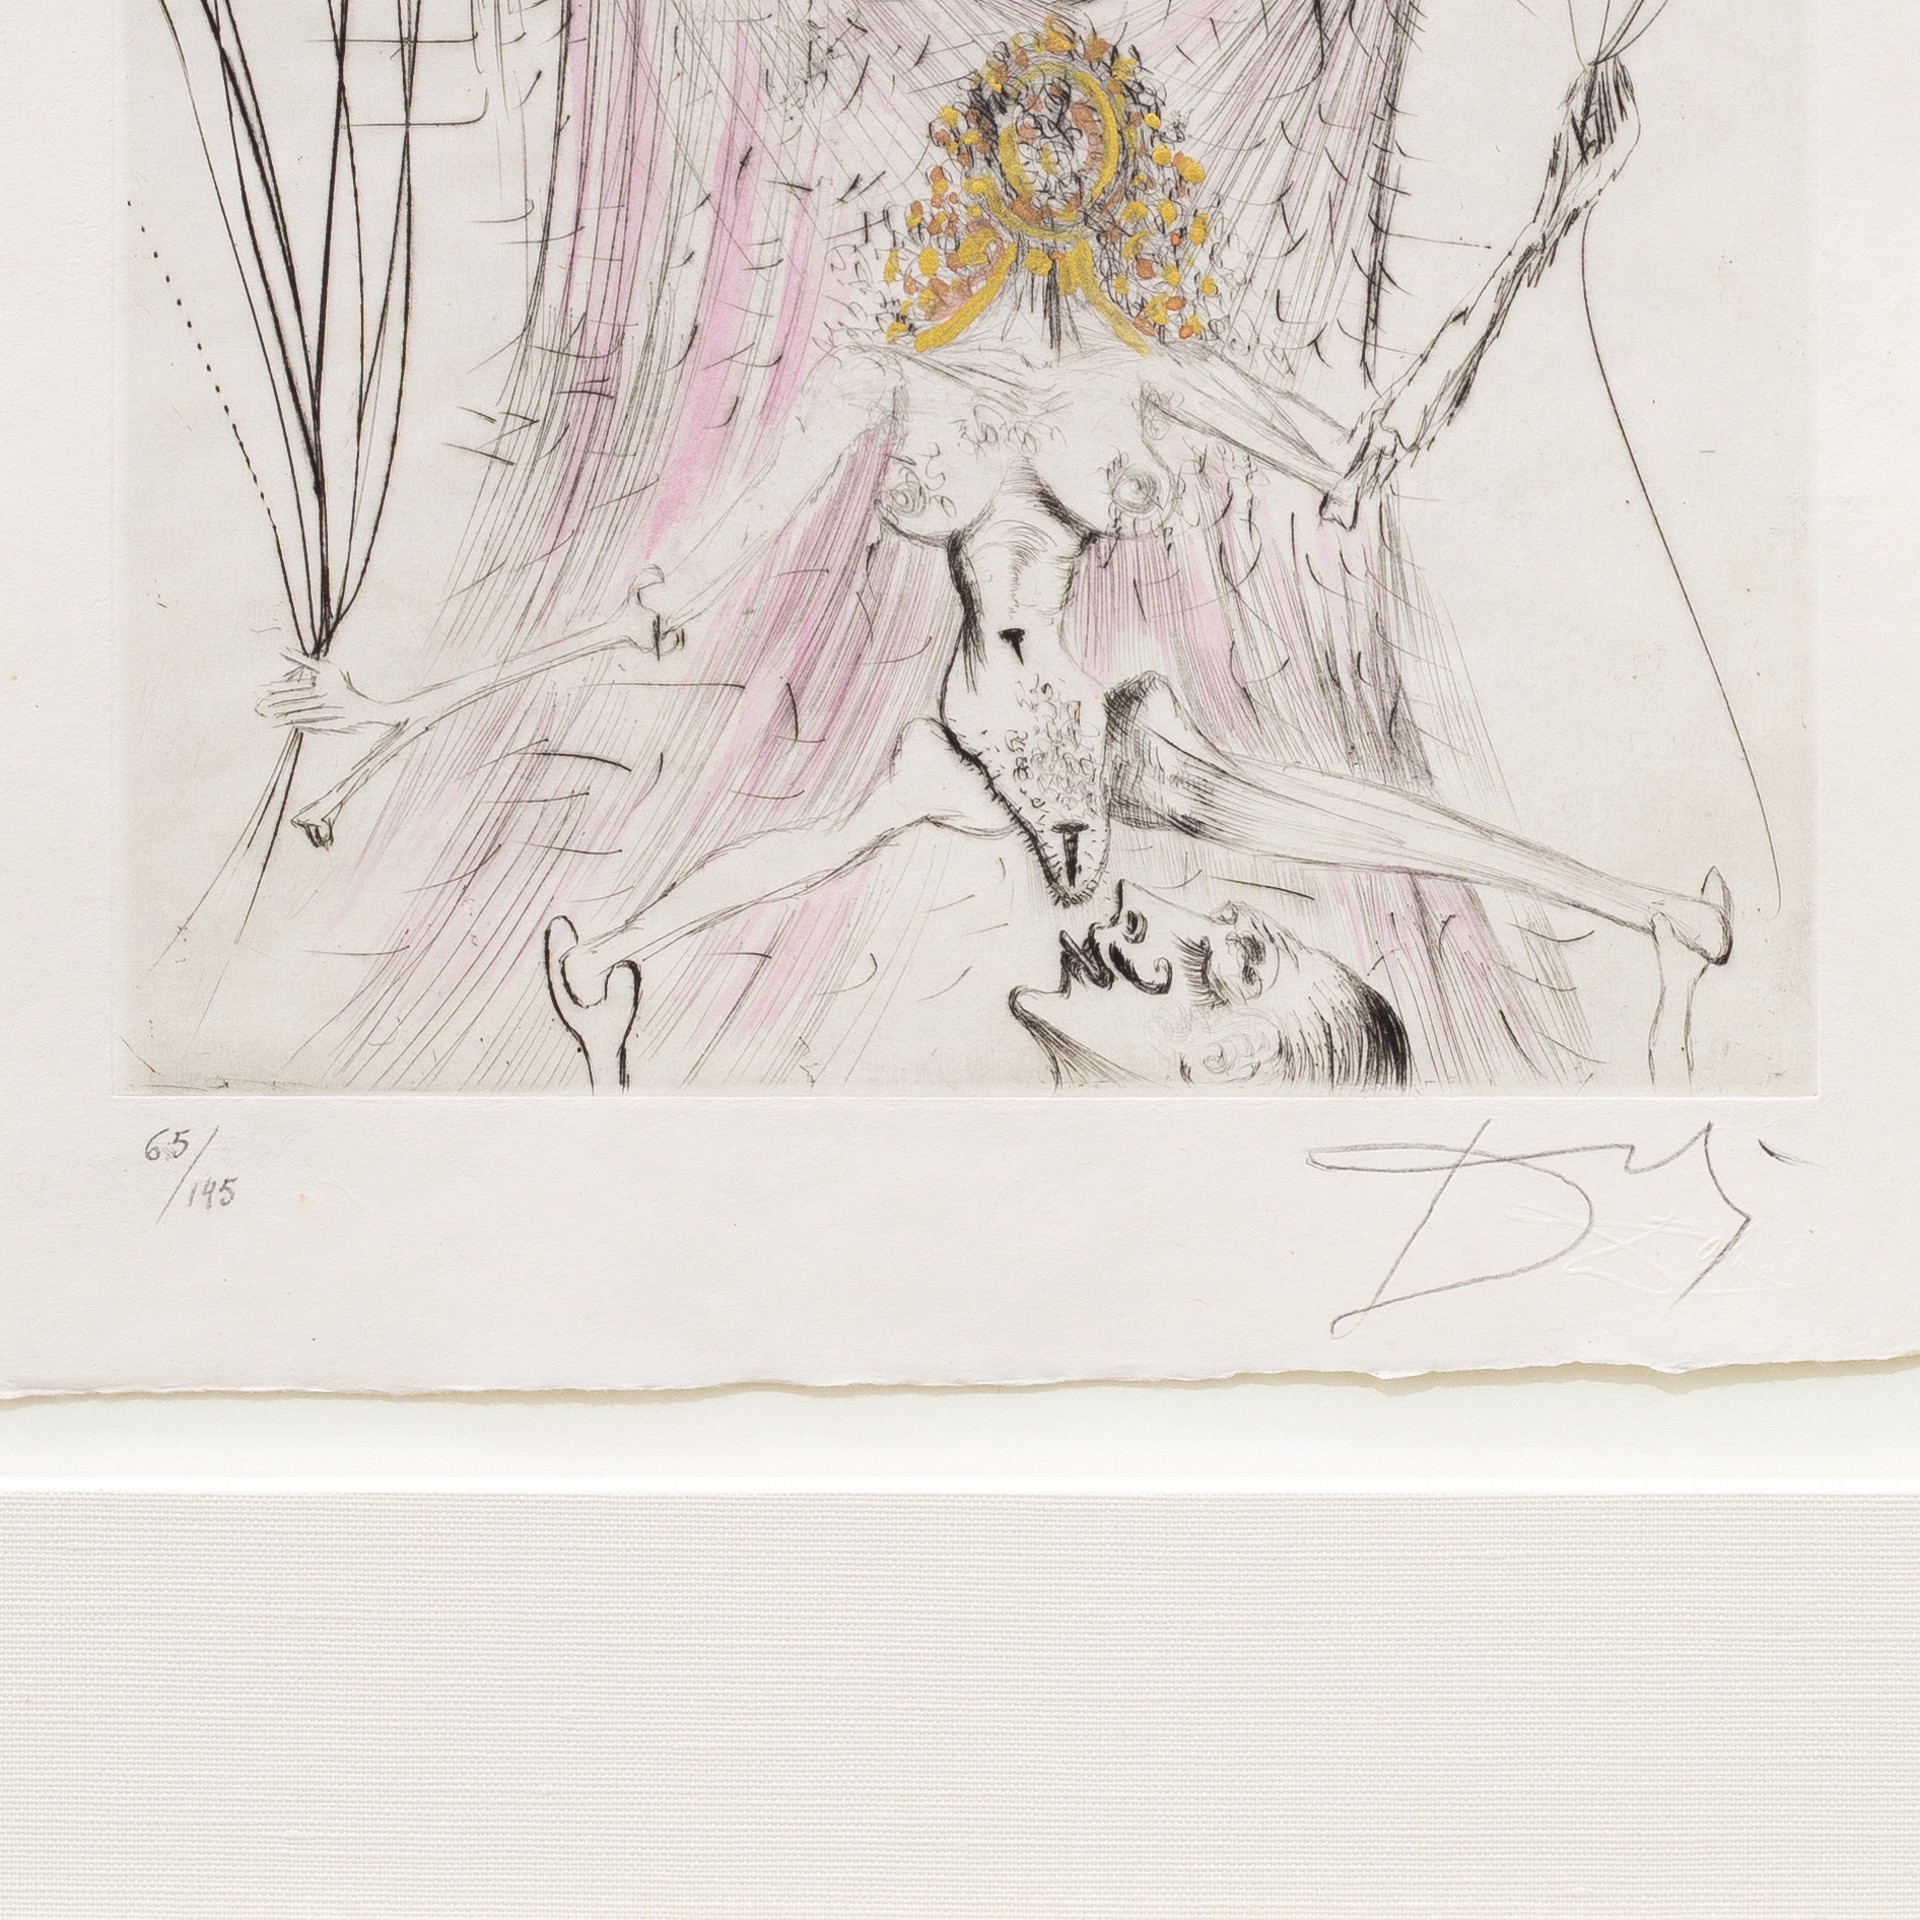 Venus in Furs "Woman Holding Veil" by Salvador Dalí